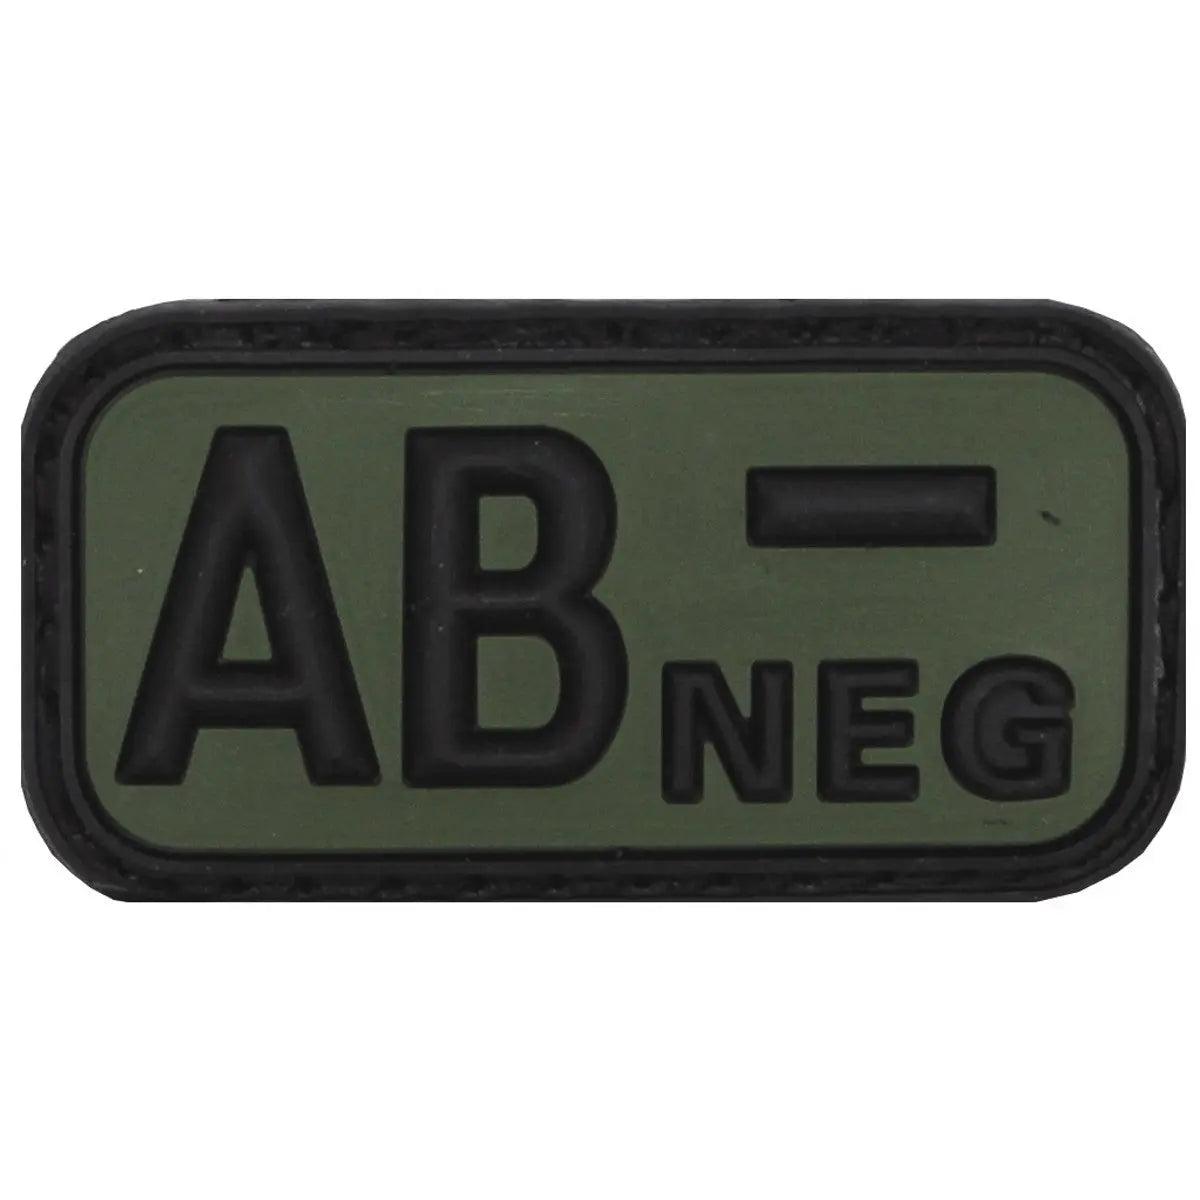 Velcro Patch, black-OD green, blood group "AB NEG", 3D NSO Gear